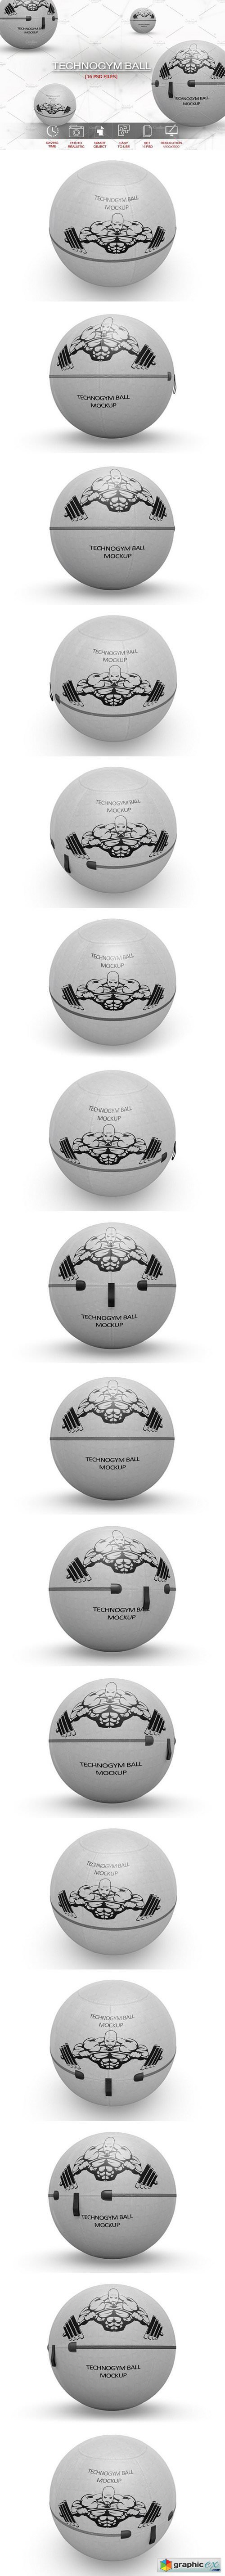 Technogym Ball MockUp